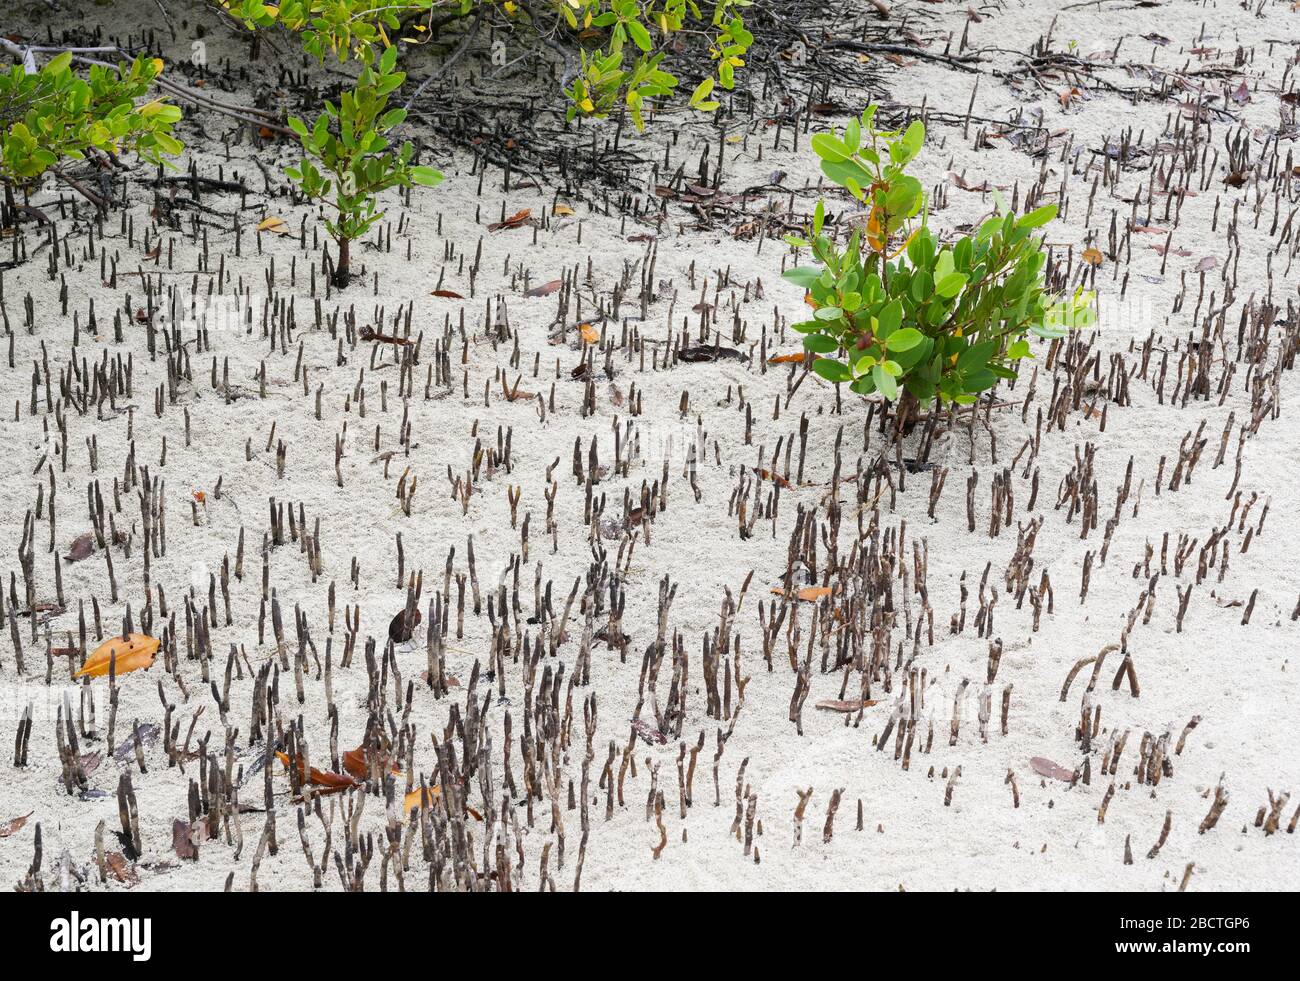 Pneumatophores aerating roots of black mangrove trees Avicennia germinans Santa Cruz Island Galapagos Stock Photo